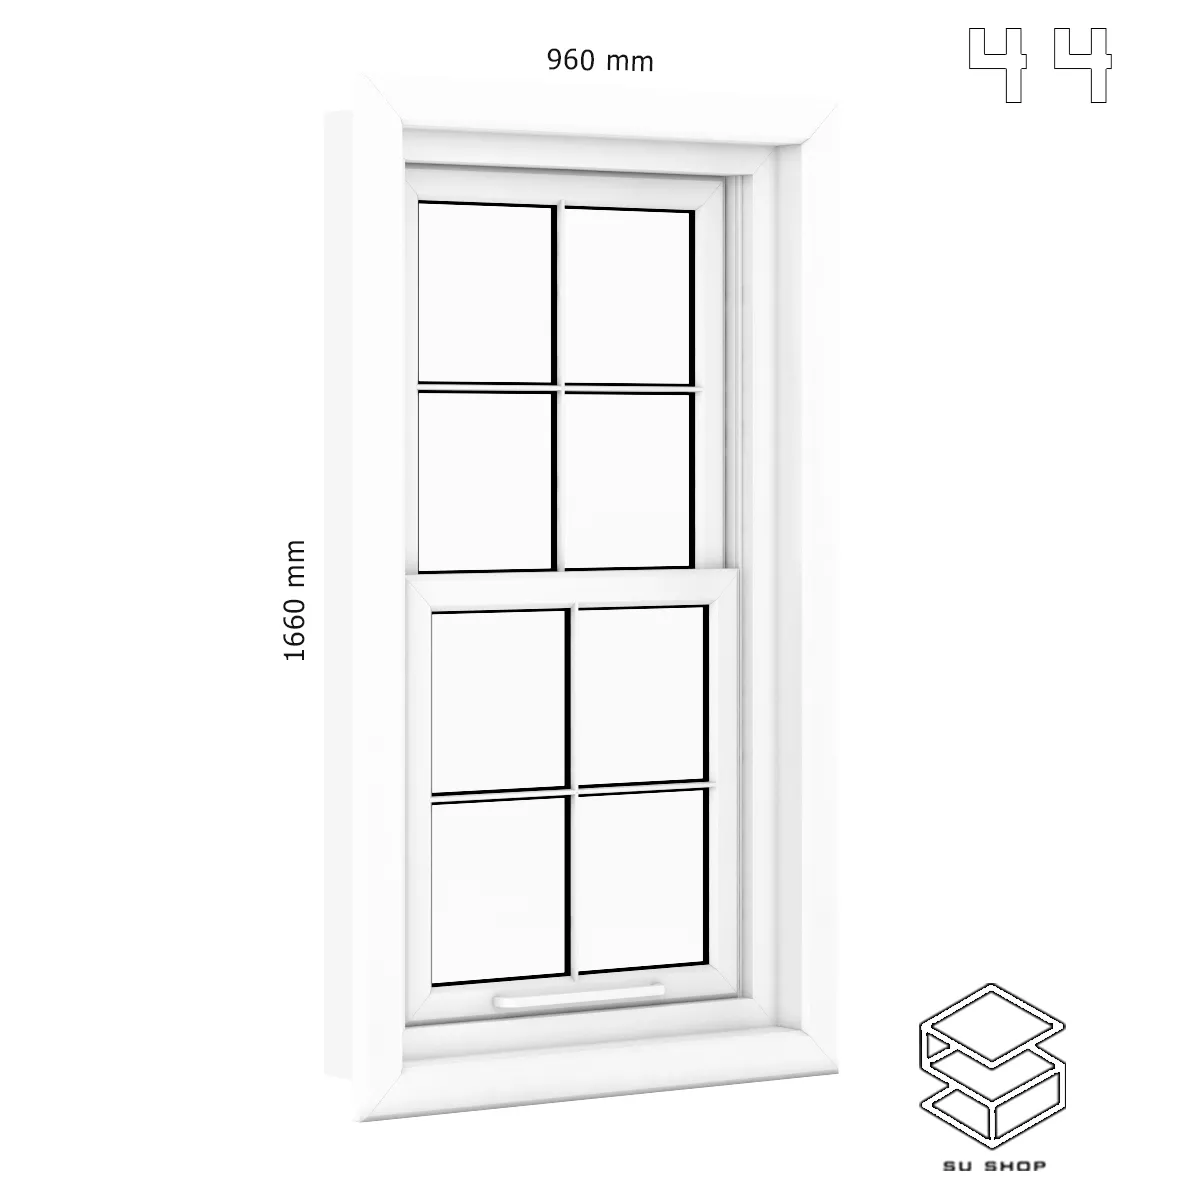 MODERN WINDOWS - SKETCHUP 3D MODEL - VRAY OR ENSCAPE - ID16786